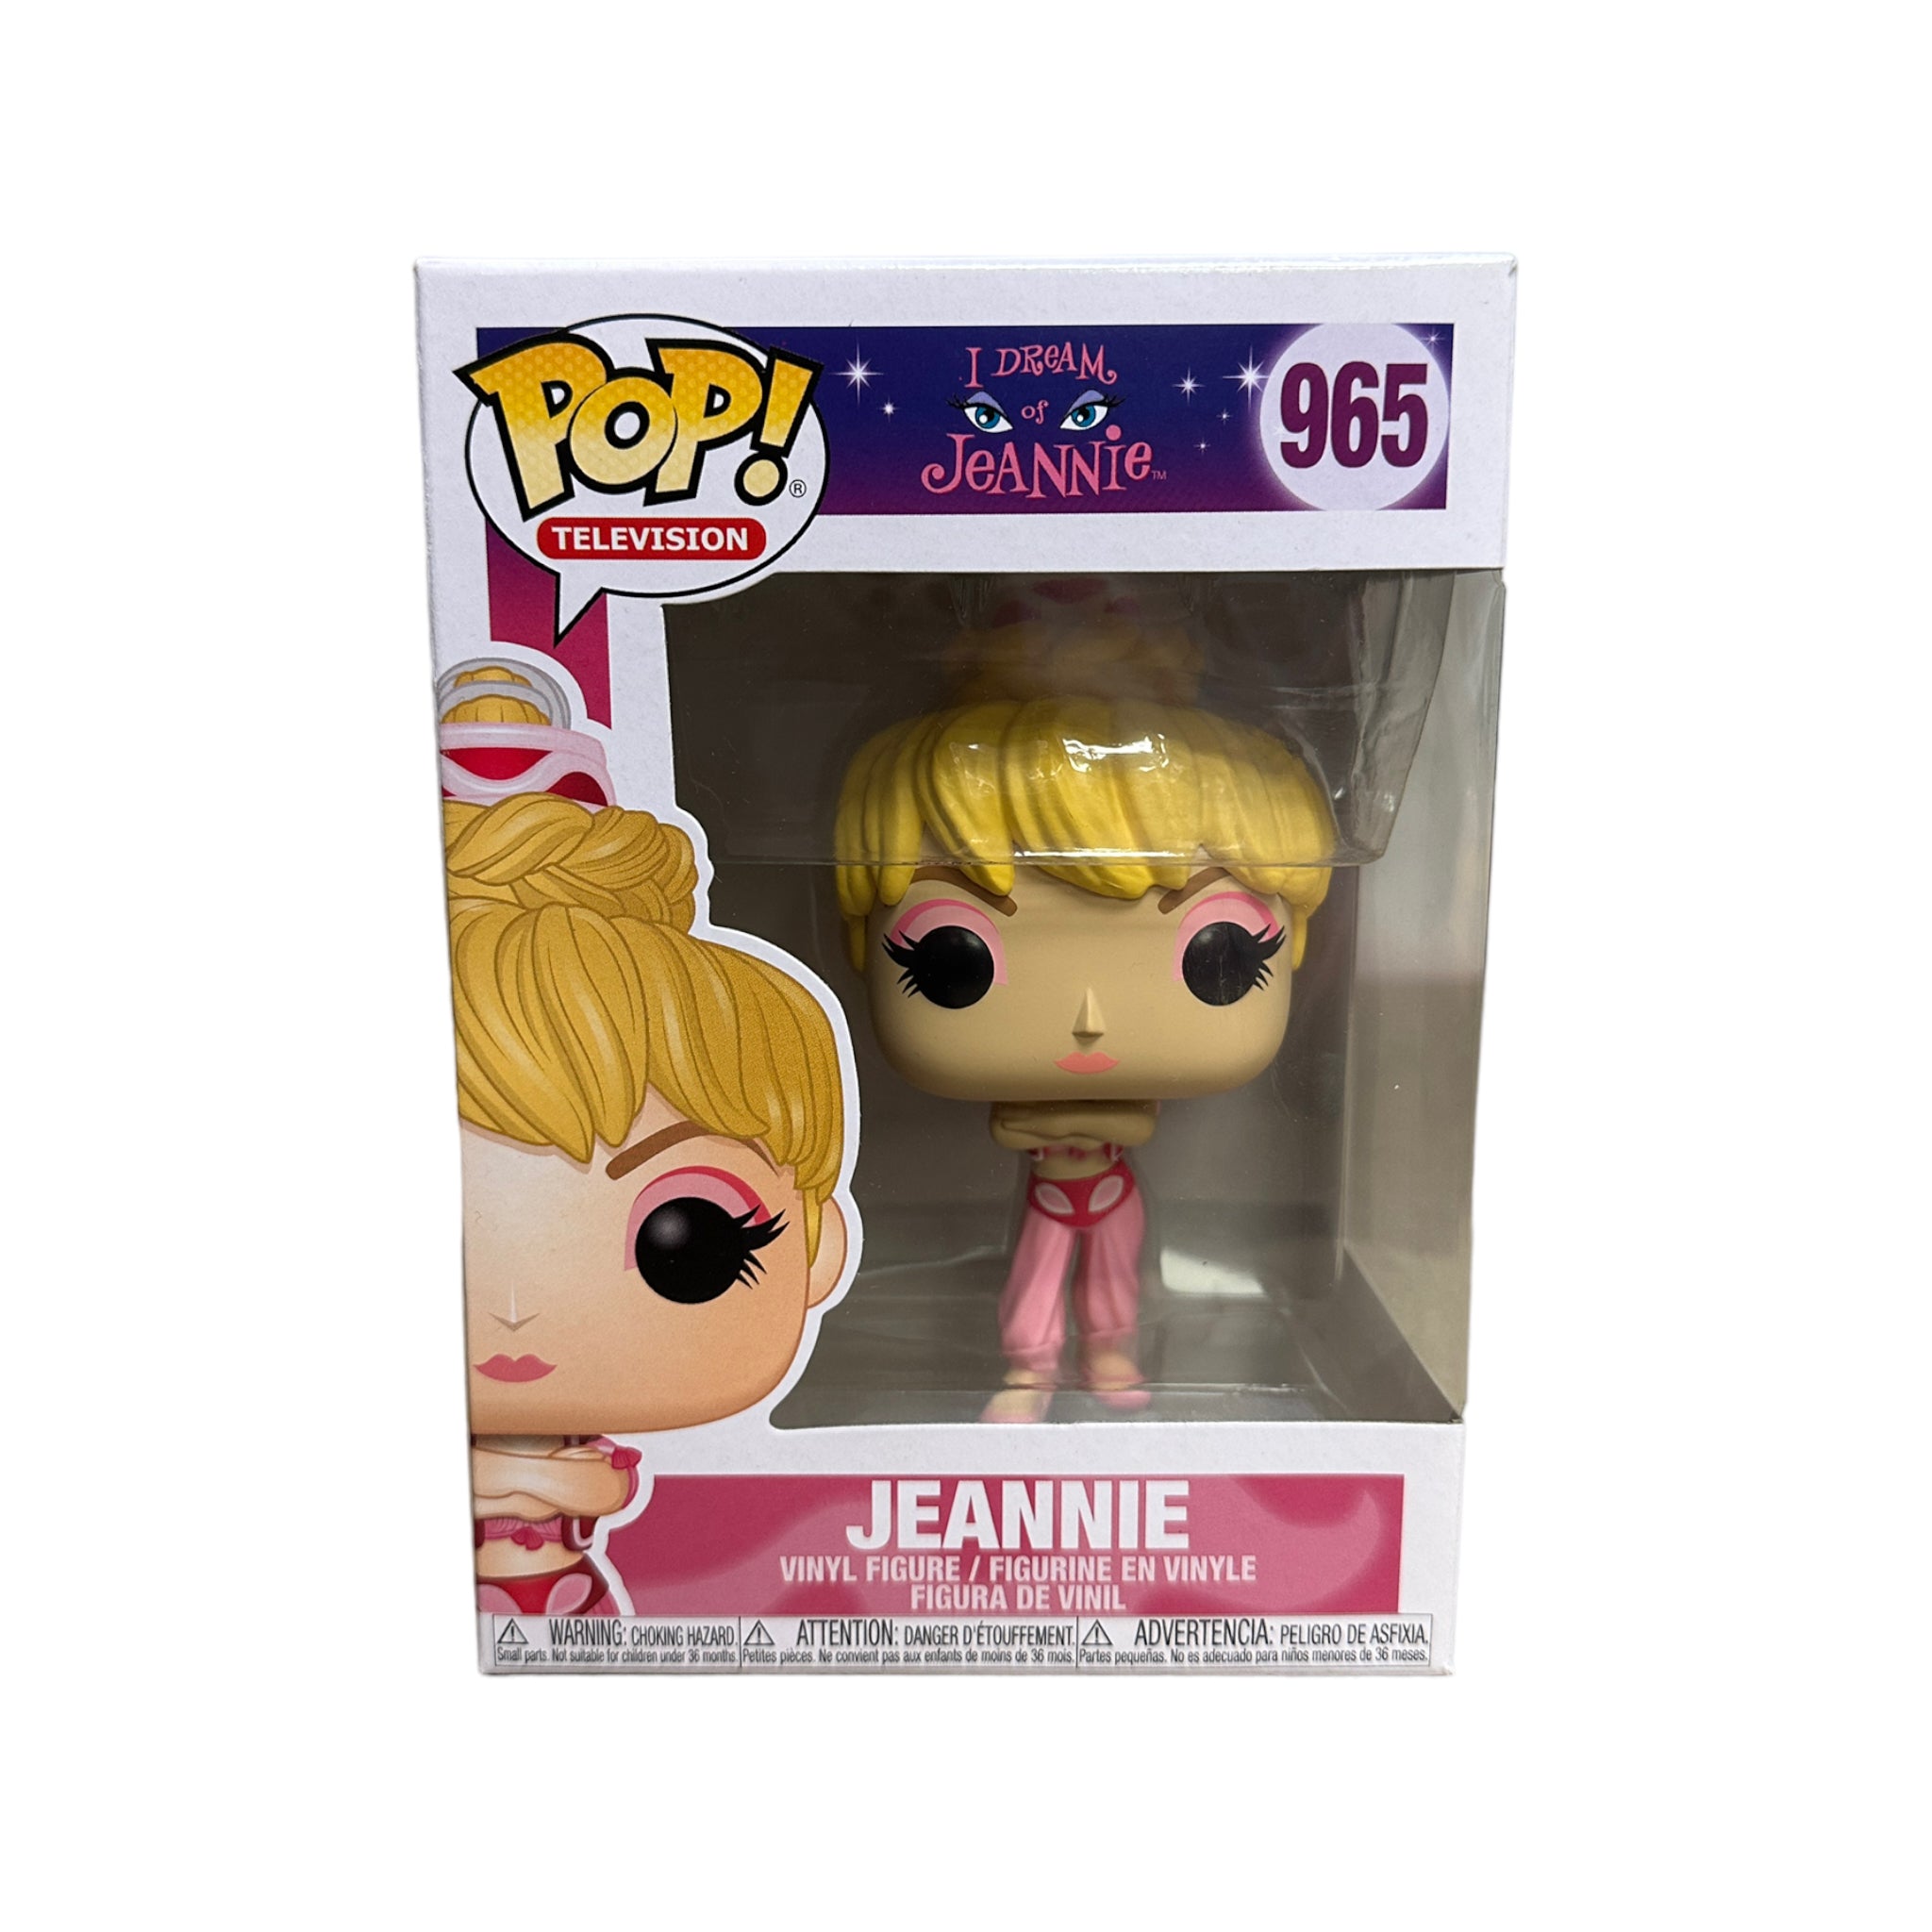 Jeannie #965 Funko Pop! - I Dream of Jeannie - 2020 Pop! - Condition 7.5/10